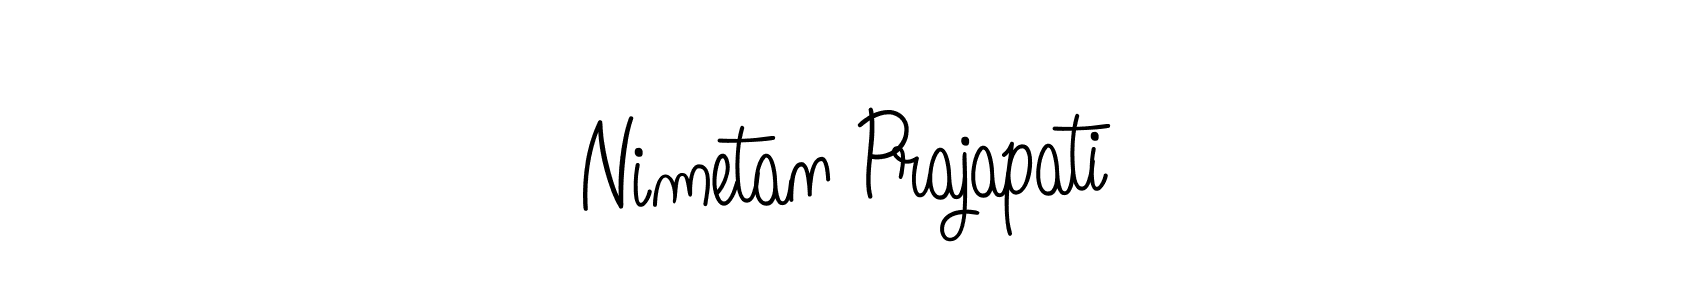 Make a beautiful signature design for name Nimetan Prajapati. Use this online signature maker to create a handwritten signature for free. Nimetan Prajapati signature style 5 images and pictures png